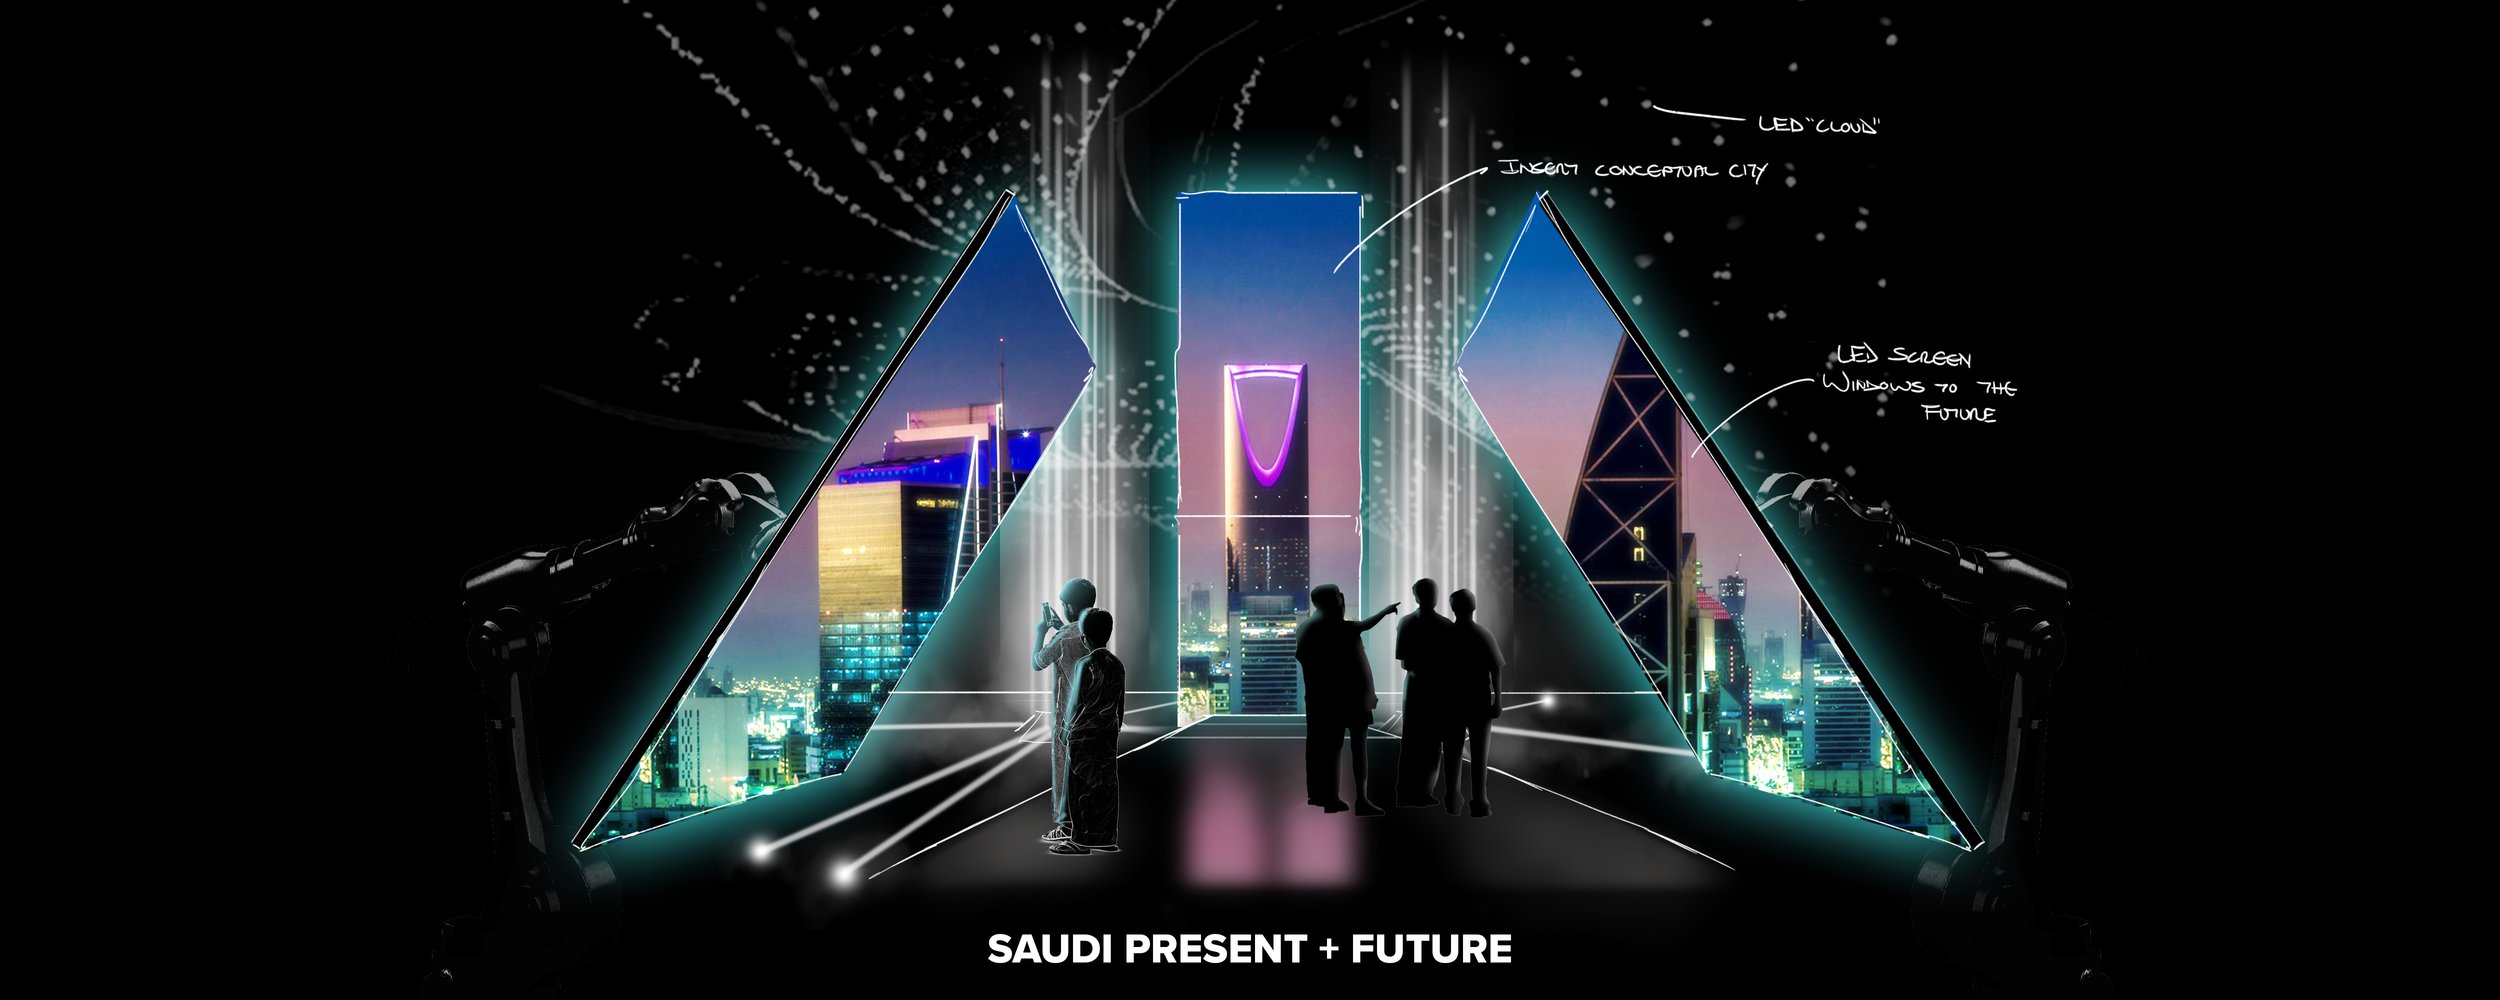 7 Saudi Present Future choreography concept 001.jpg